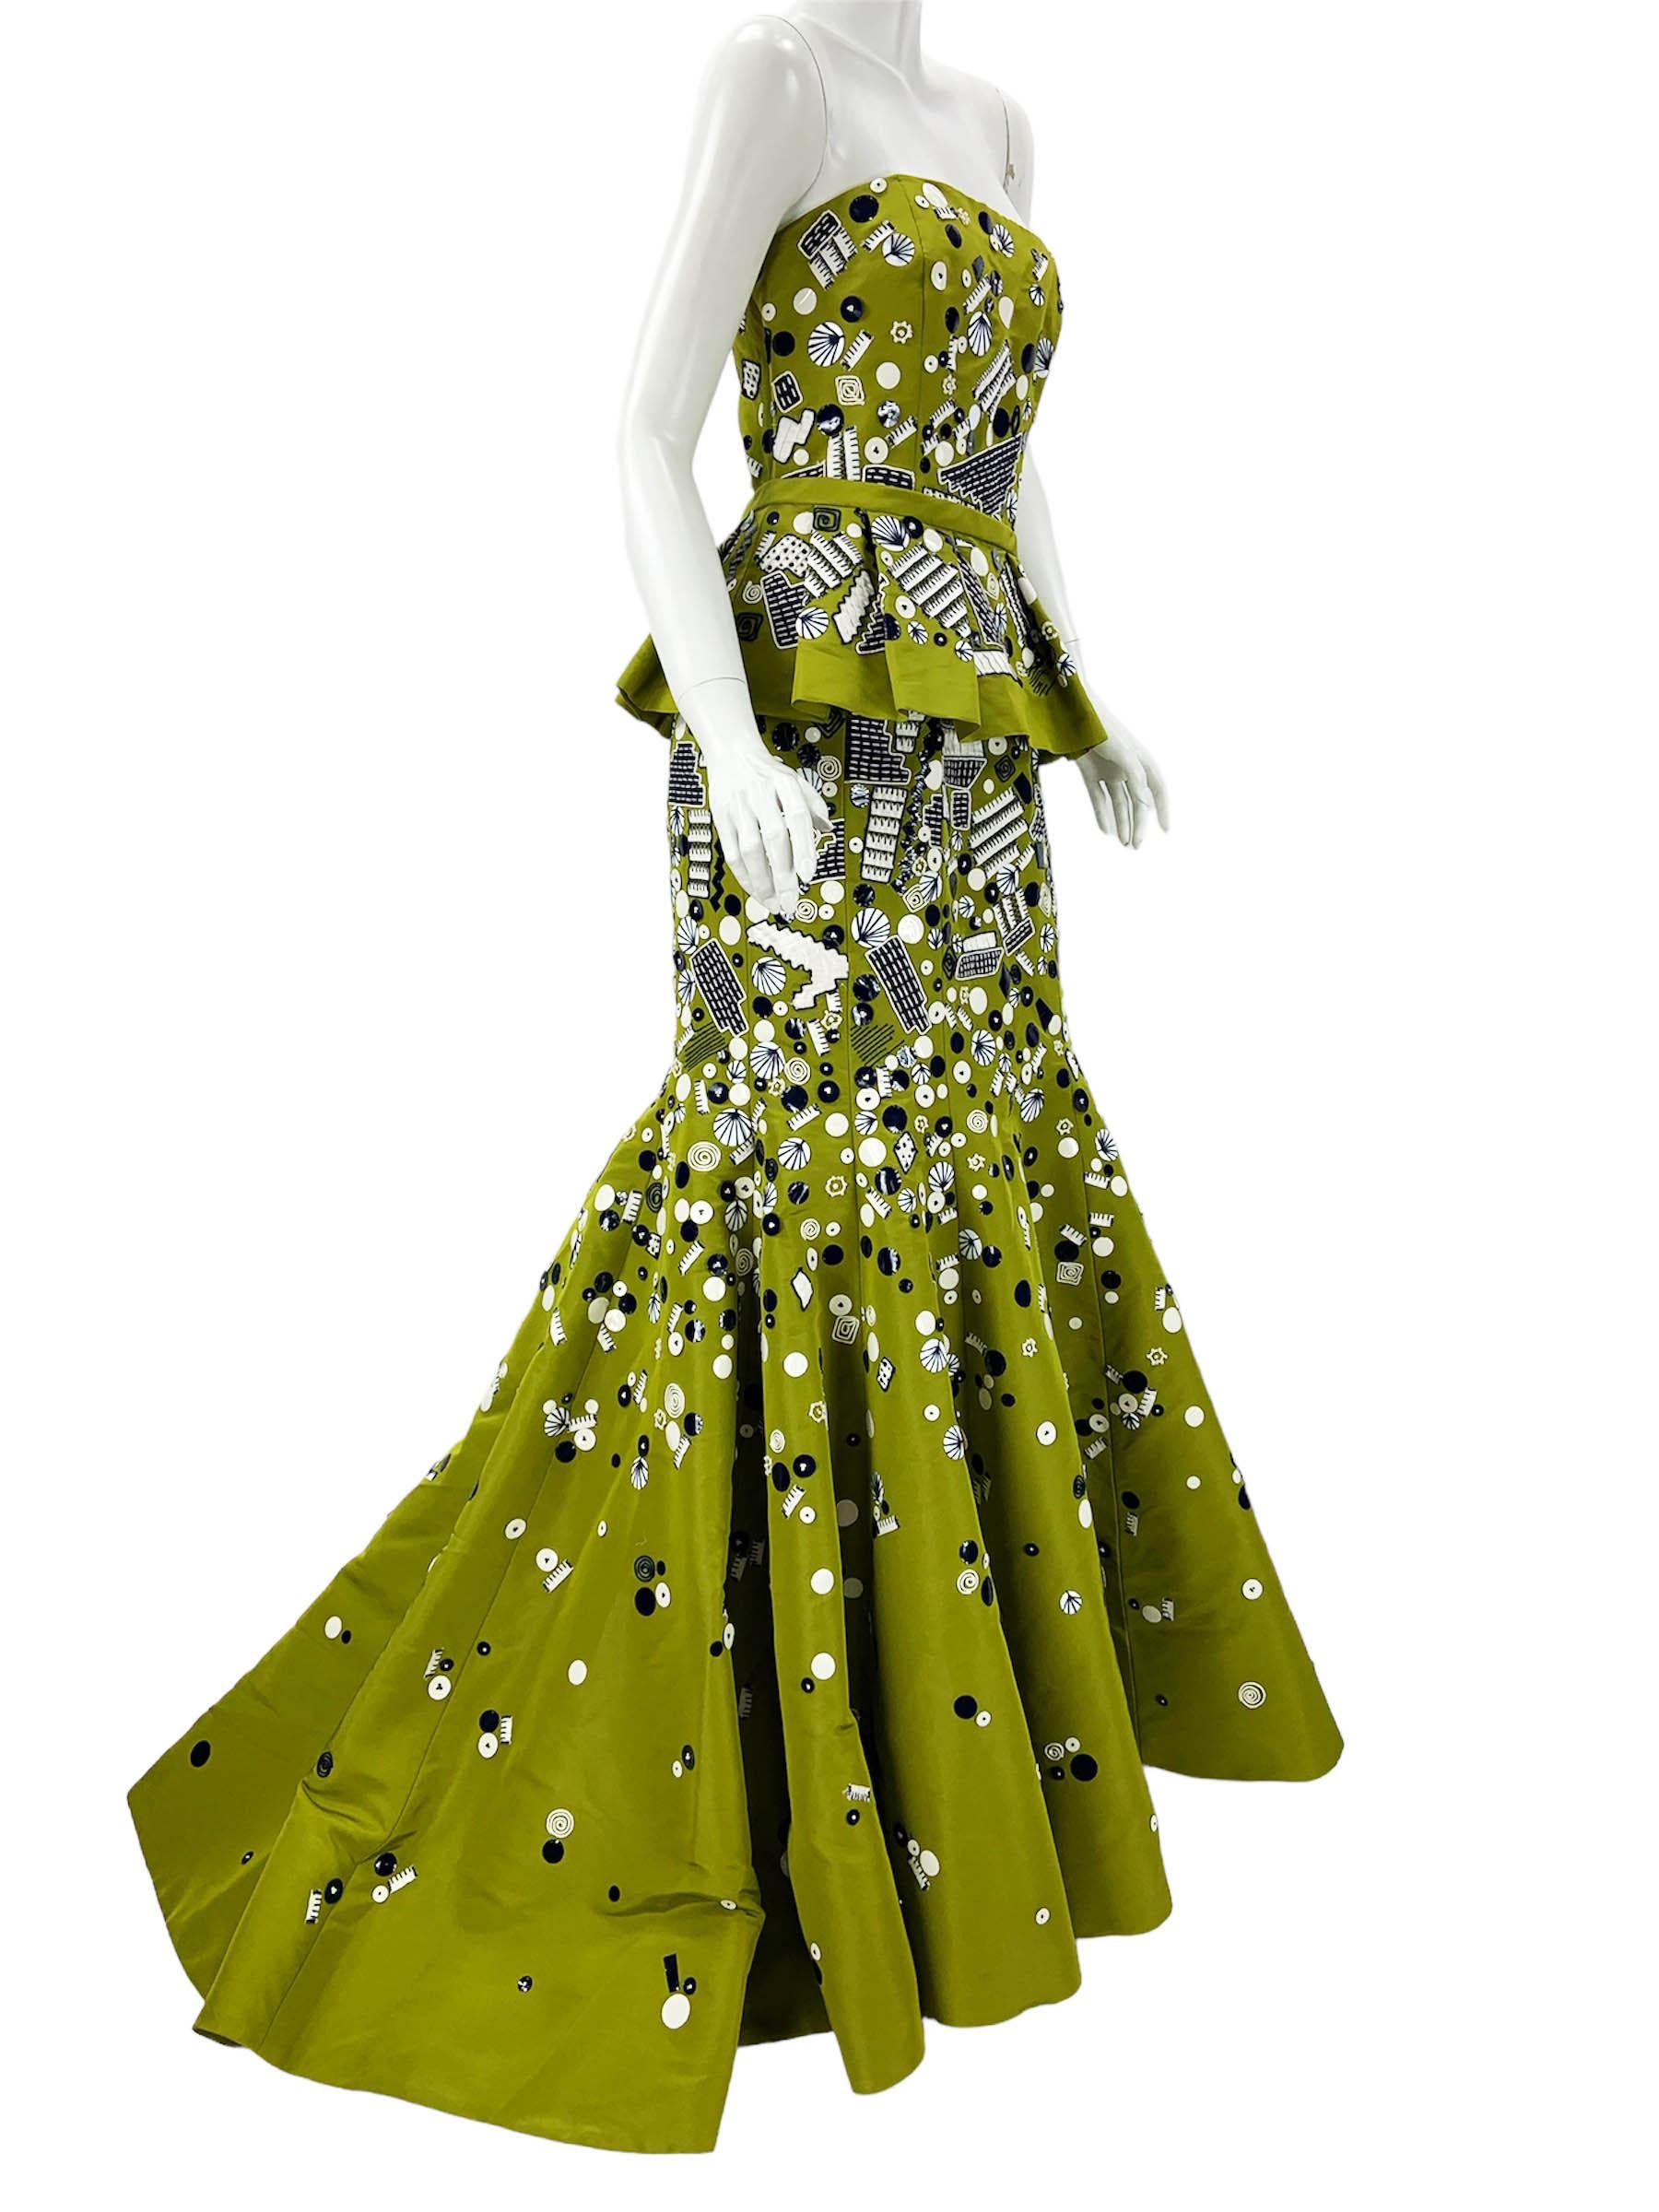 NWT Oscar de la Renta S/S 2009 Green Embellished Silk Taffeta Peplum Dress US 10 For Sale 3